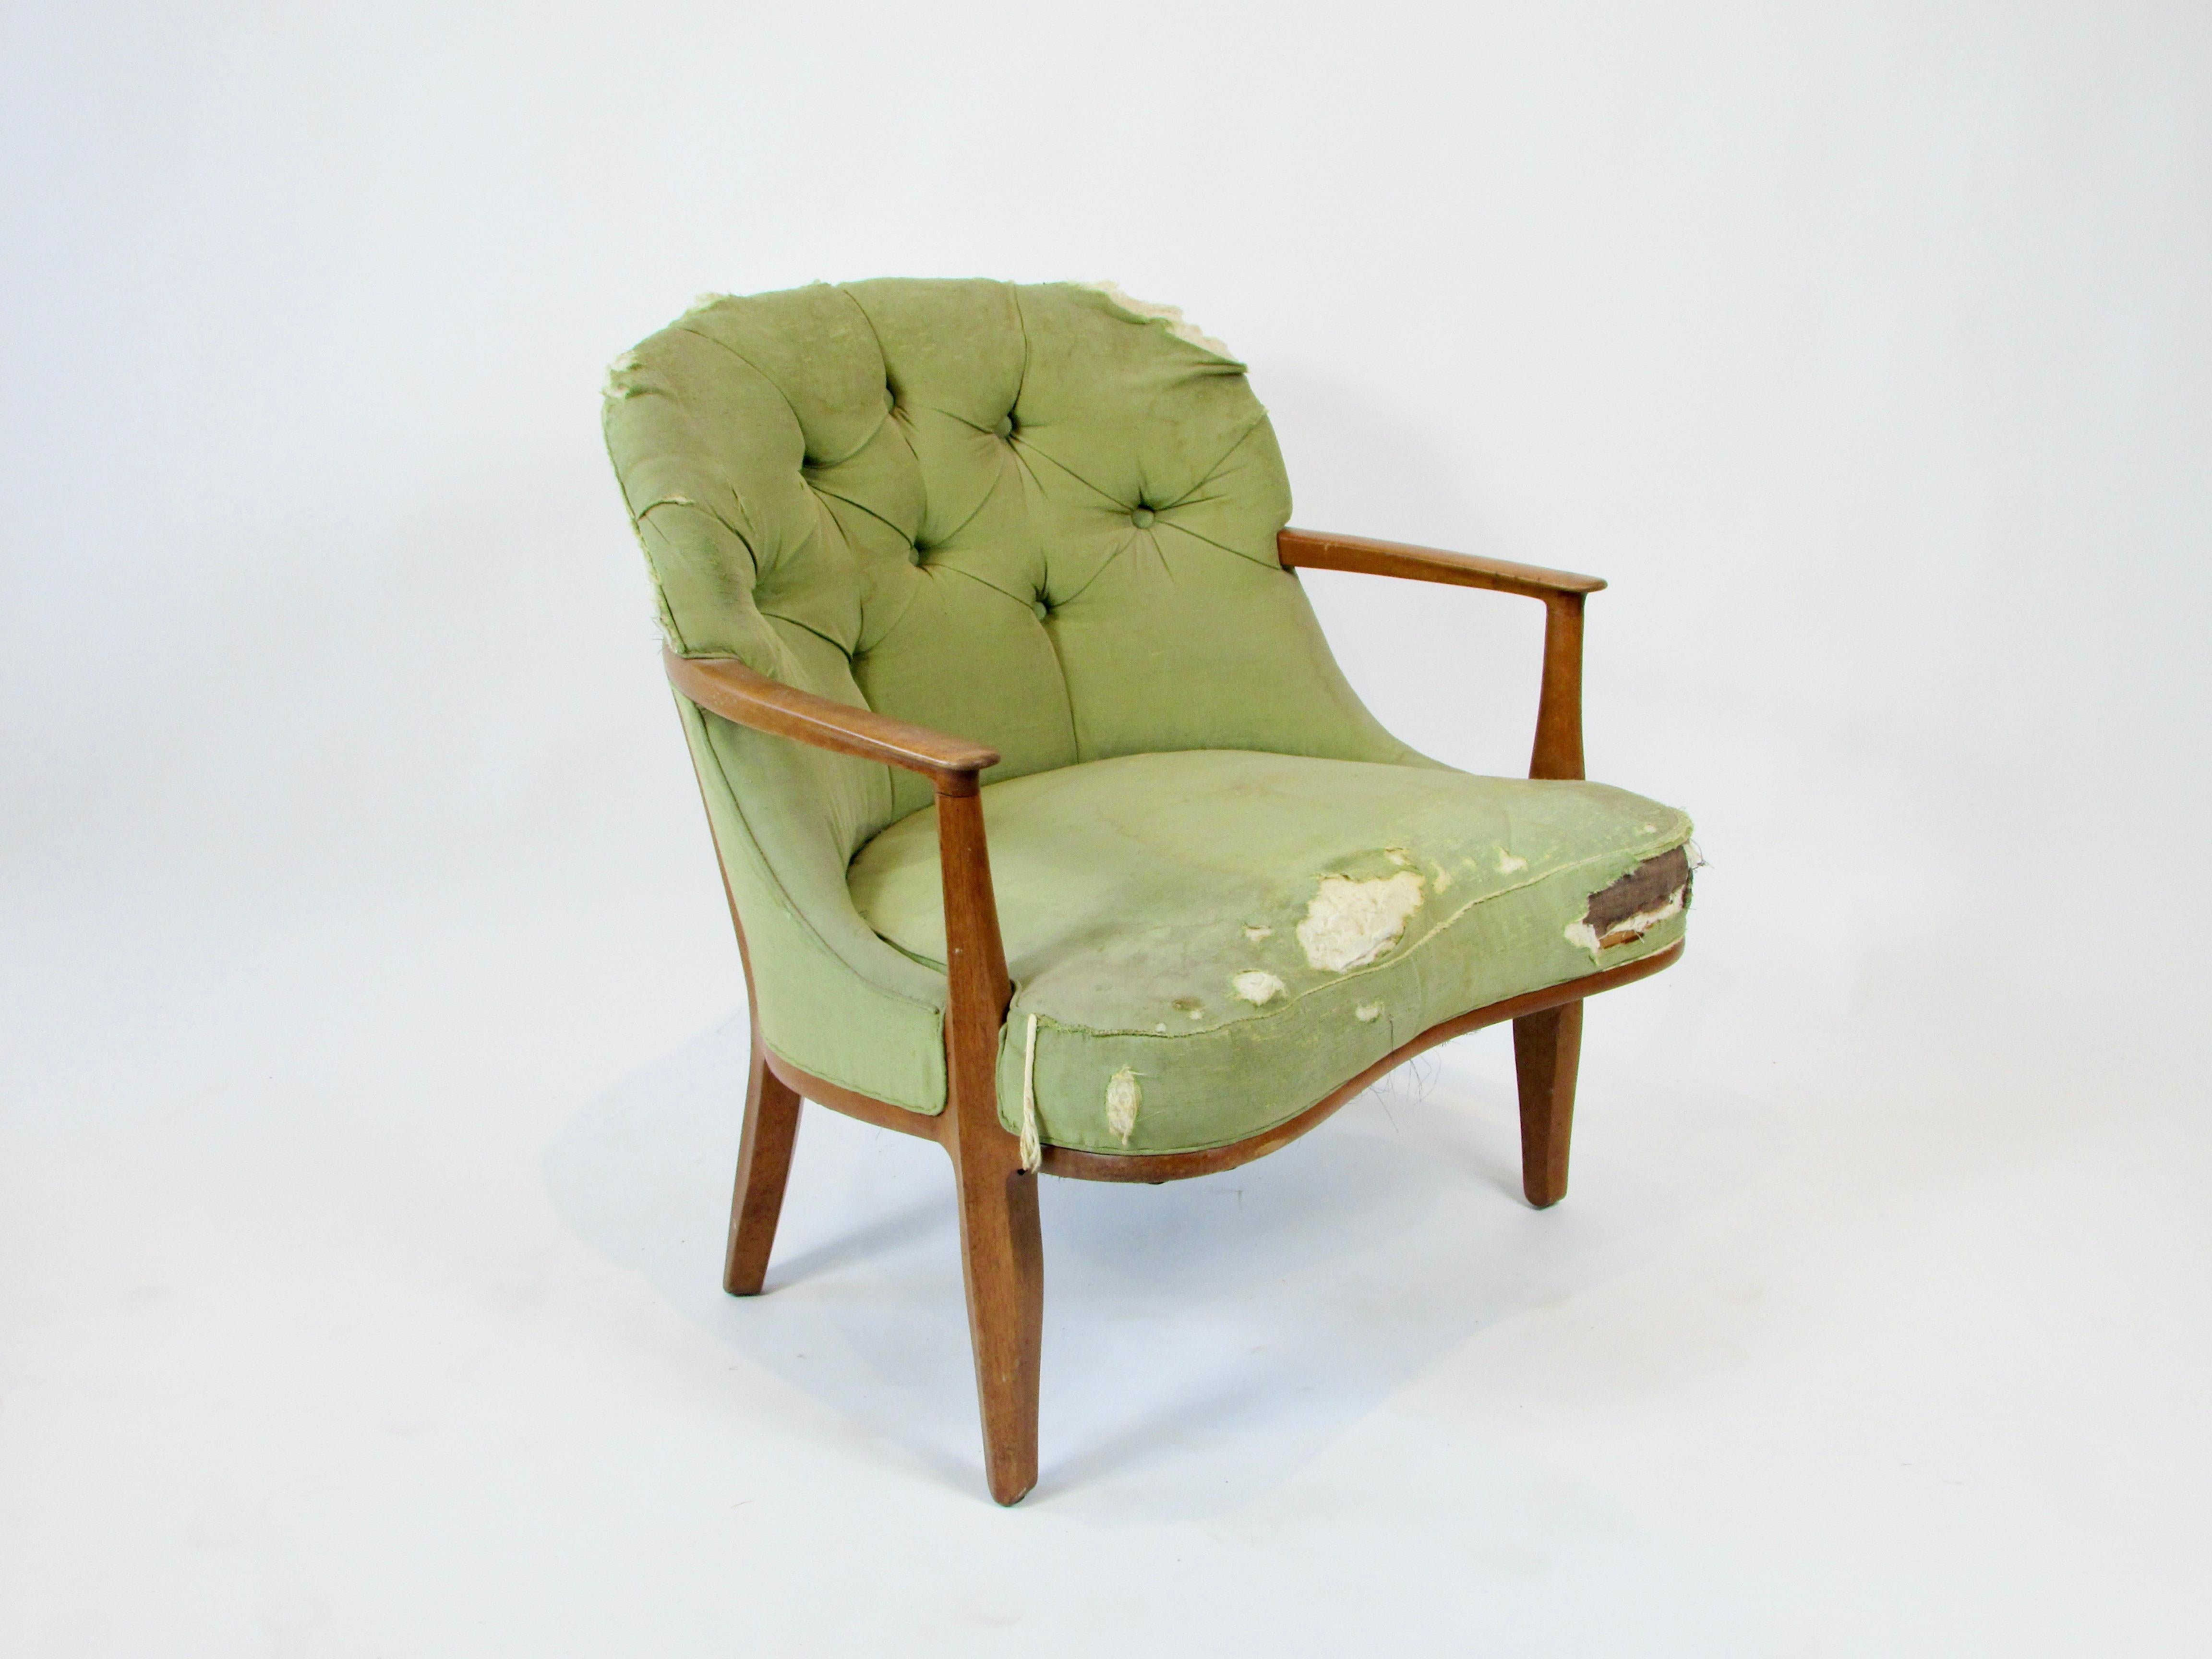 Upholstery As found  single Edward Wormley Dunbar wood trim Janus chair model 5705